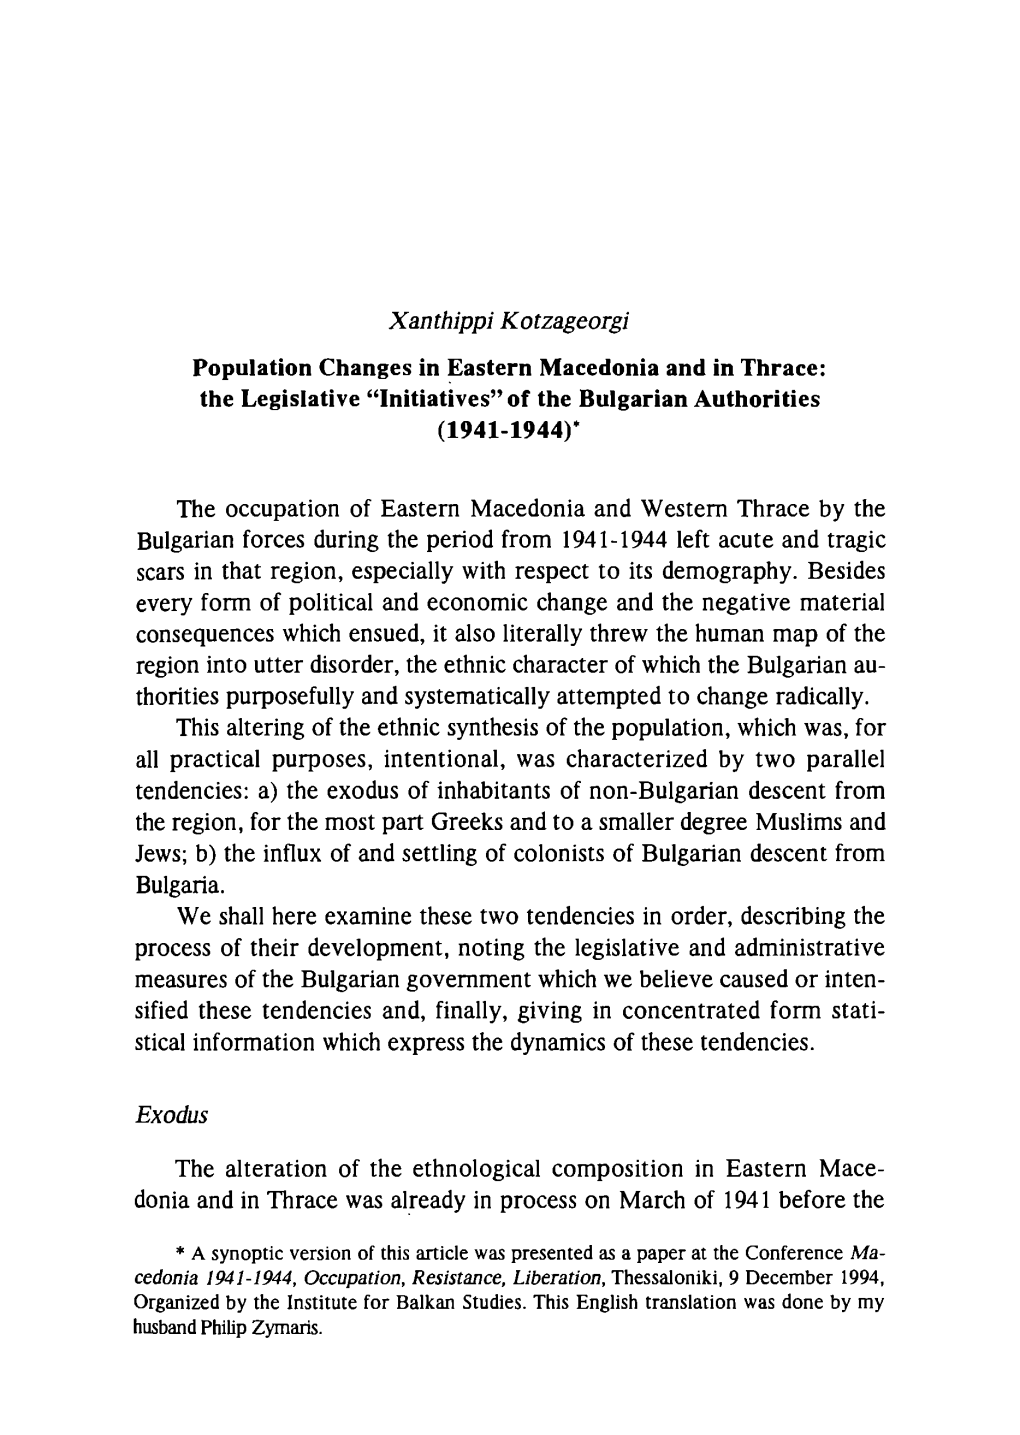 Xanthippi Kotzageorgi the Occupation of Eastern Macedonia and Western